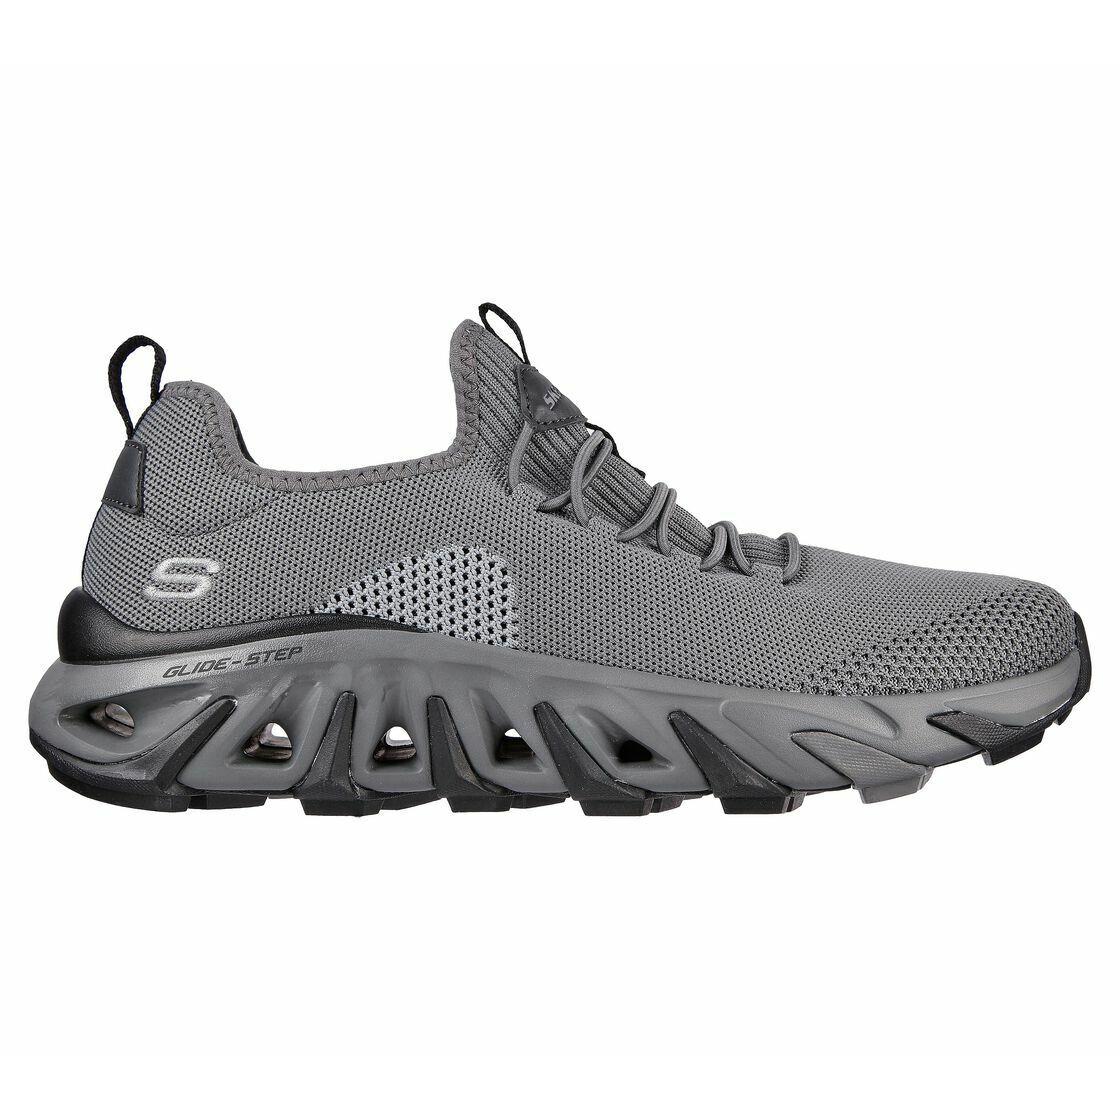 Skechers Glide Step Dark Gray Shoe Men Memory Foam Sport Comfort Slip On 210322 - Dark Gray